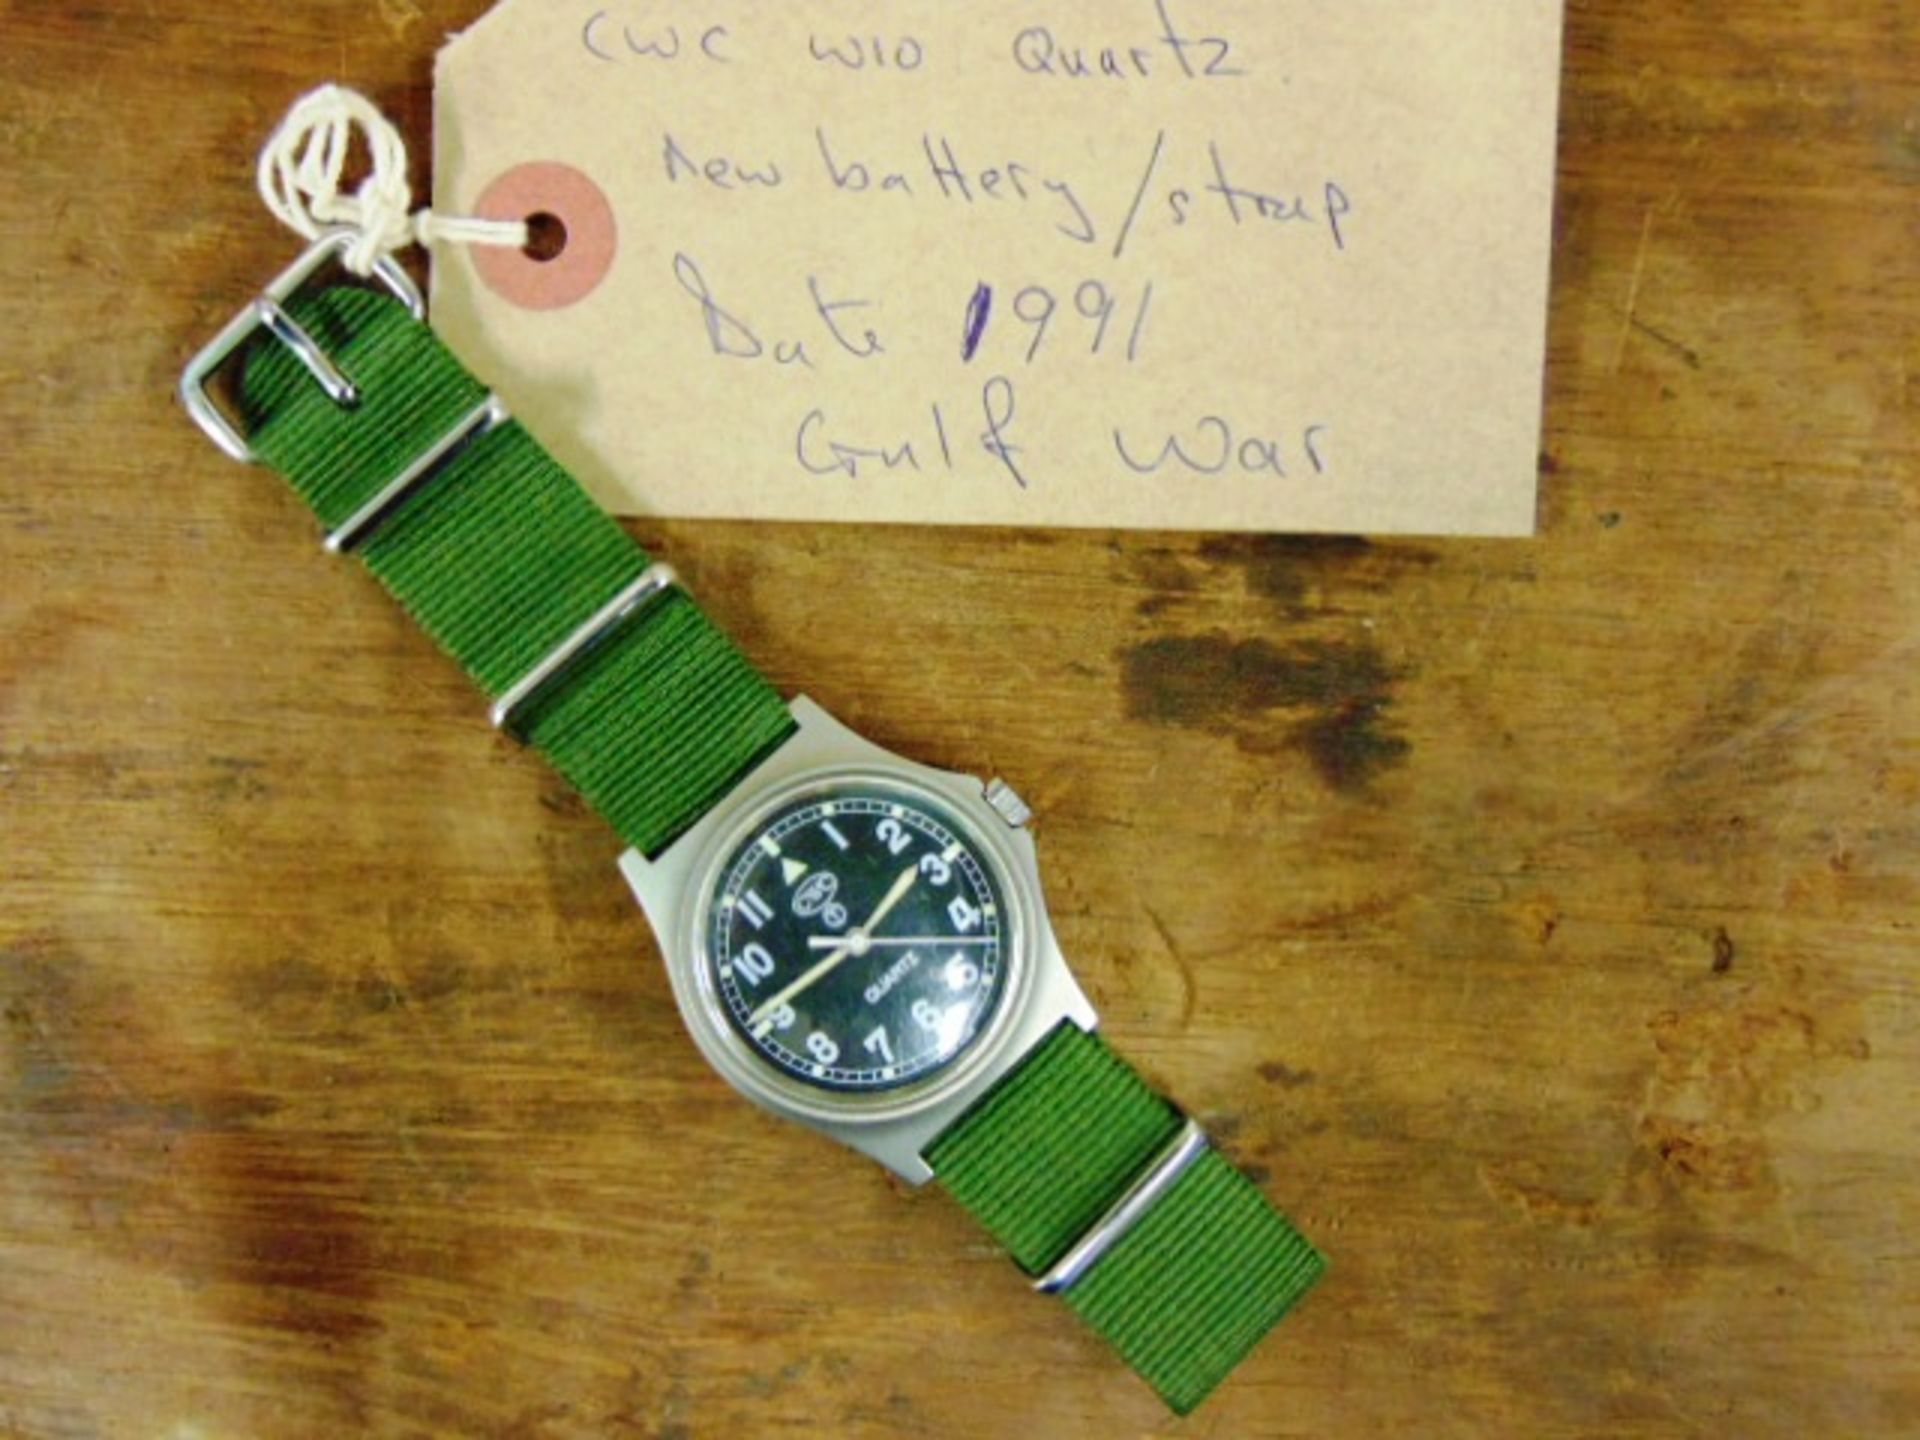 Gulf War CWC quartz wrist watch - Image 2 of 6